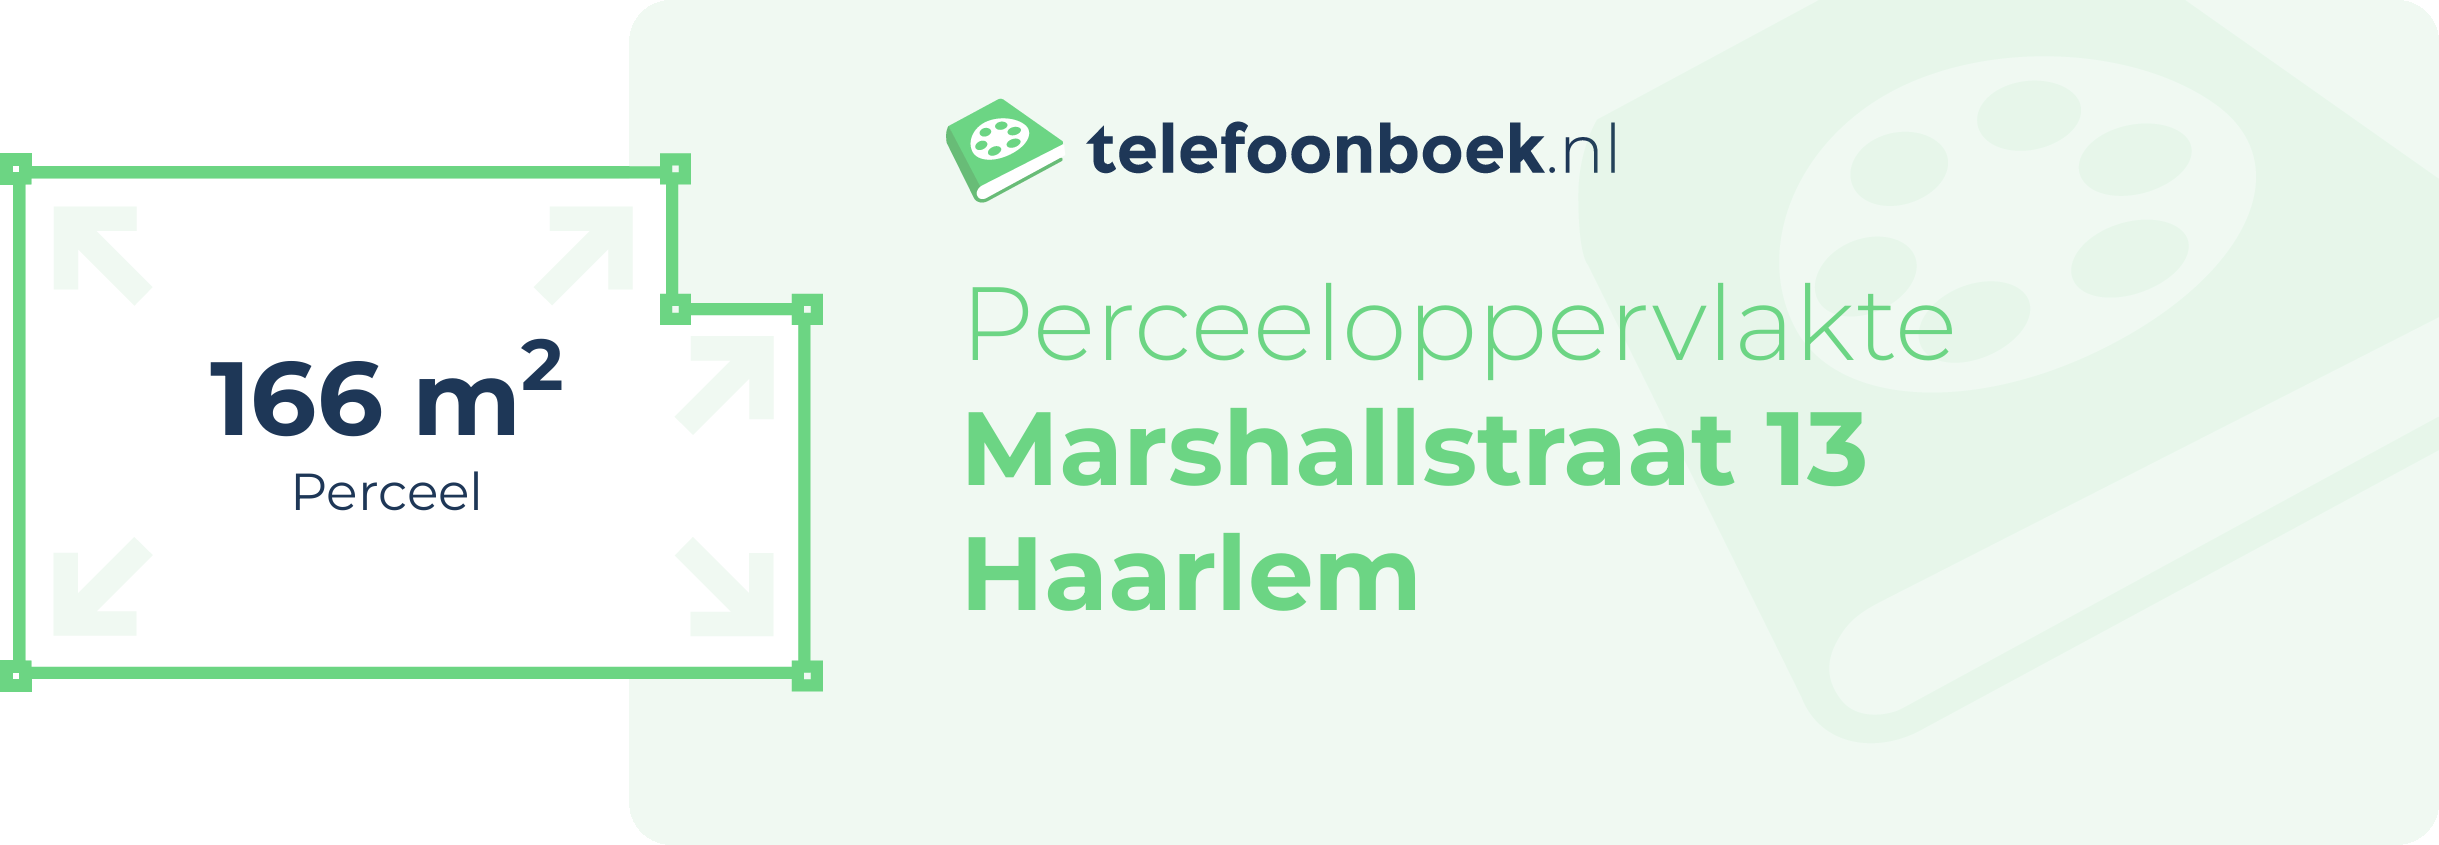 Perceeloppervlakte Marshallstraat 13 Haarlem